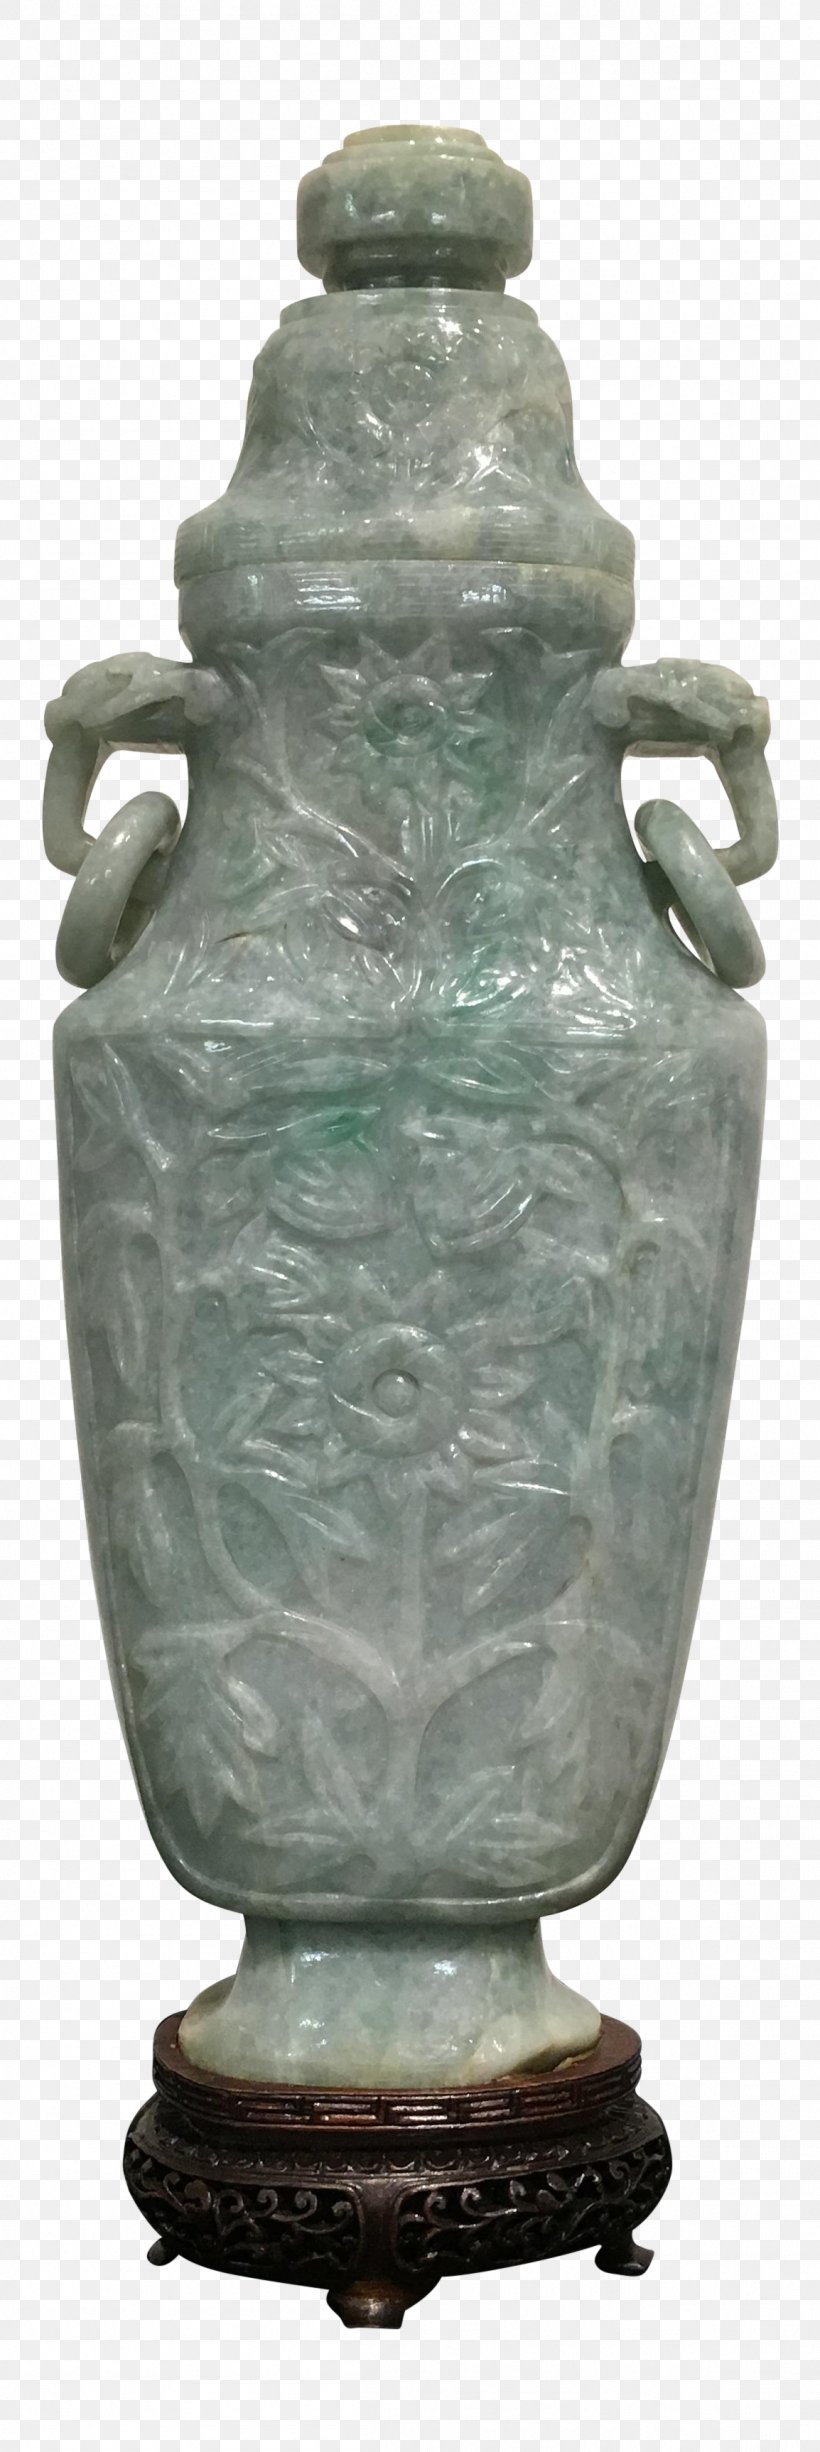 Qing Dynasty Lotus Gallery Vase 19th Century Pottery, PNG, 1154x3452px, 19th Century, Qing Dynasty, Artifact, Carving, Ceramic Download Free